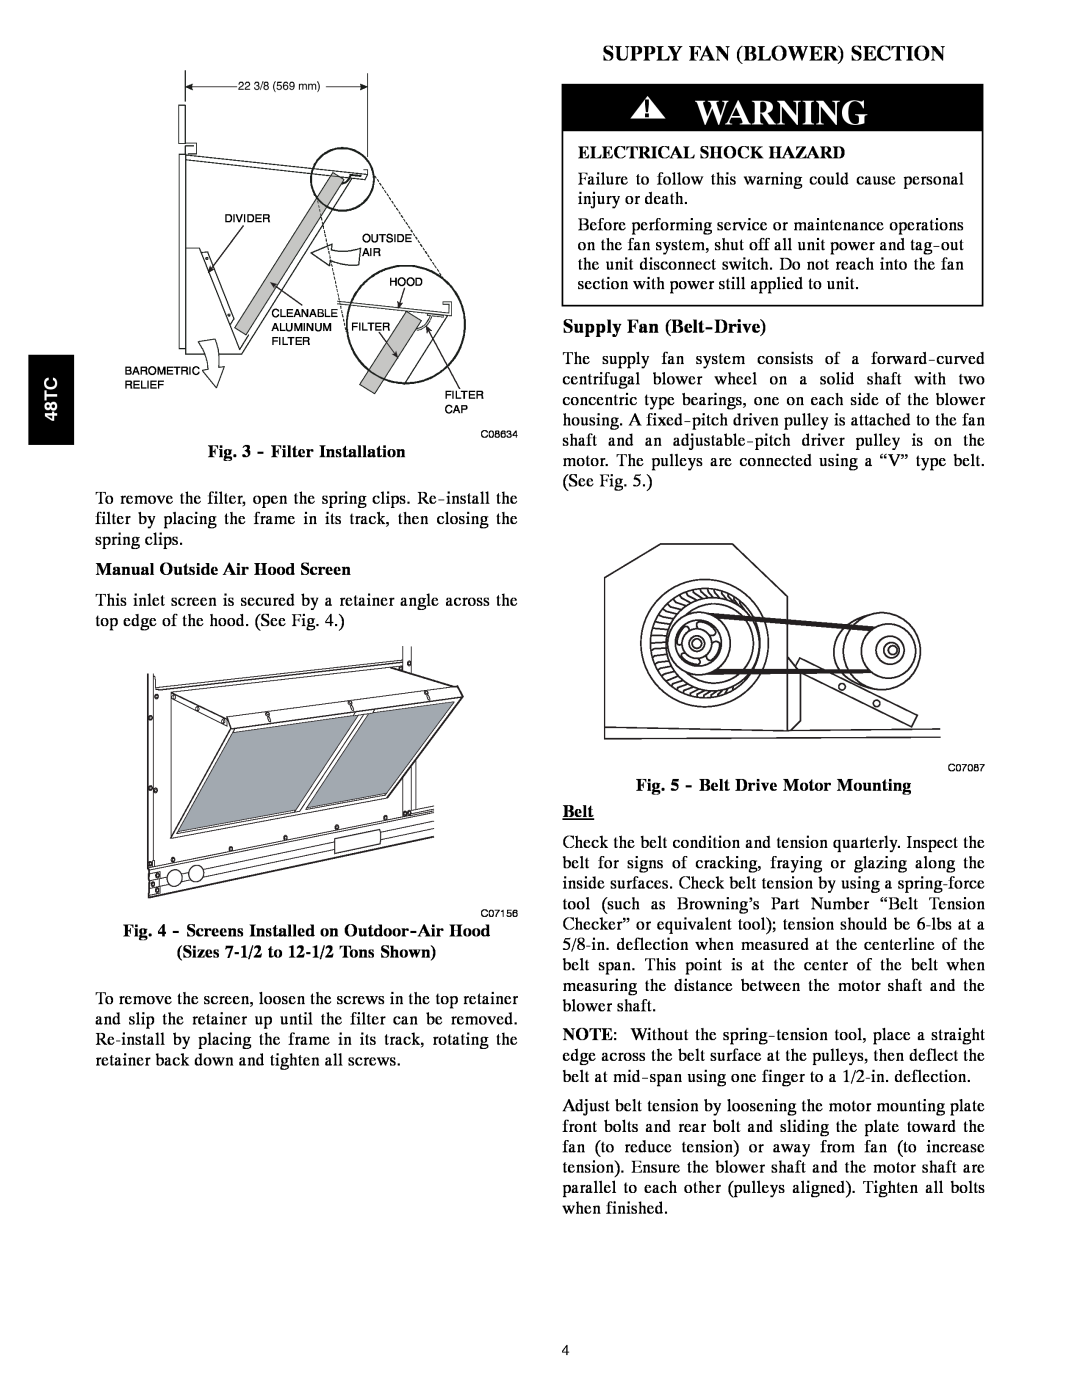 Carrier 48TC*D08 Supply Fan Blower Section, Supply Fan Belt-Drive, Filter Installation, Manual Outside Air Hood Screen 